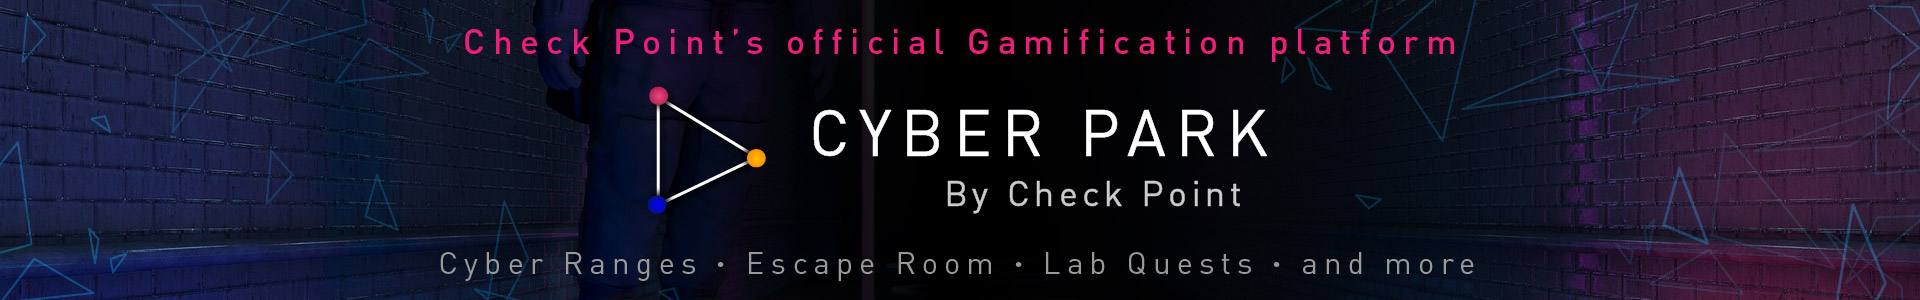 Cyber park